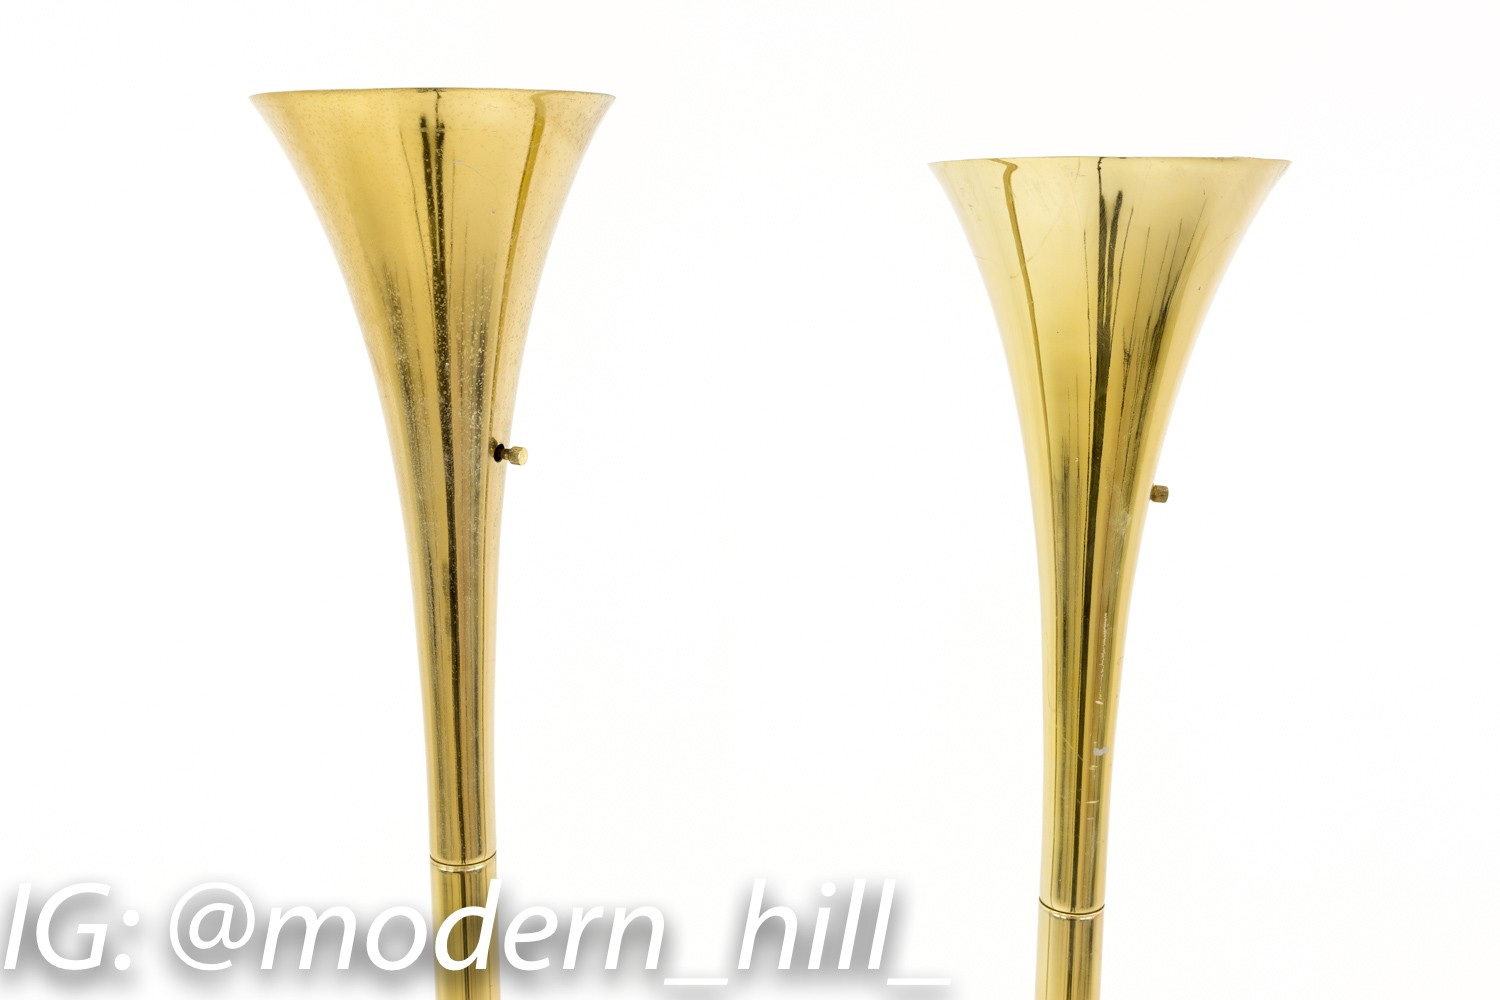 Laurel Art Deco Tourchette Mid Century Modern Floor Lamps in Swedish Brass - Pair